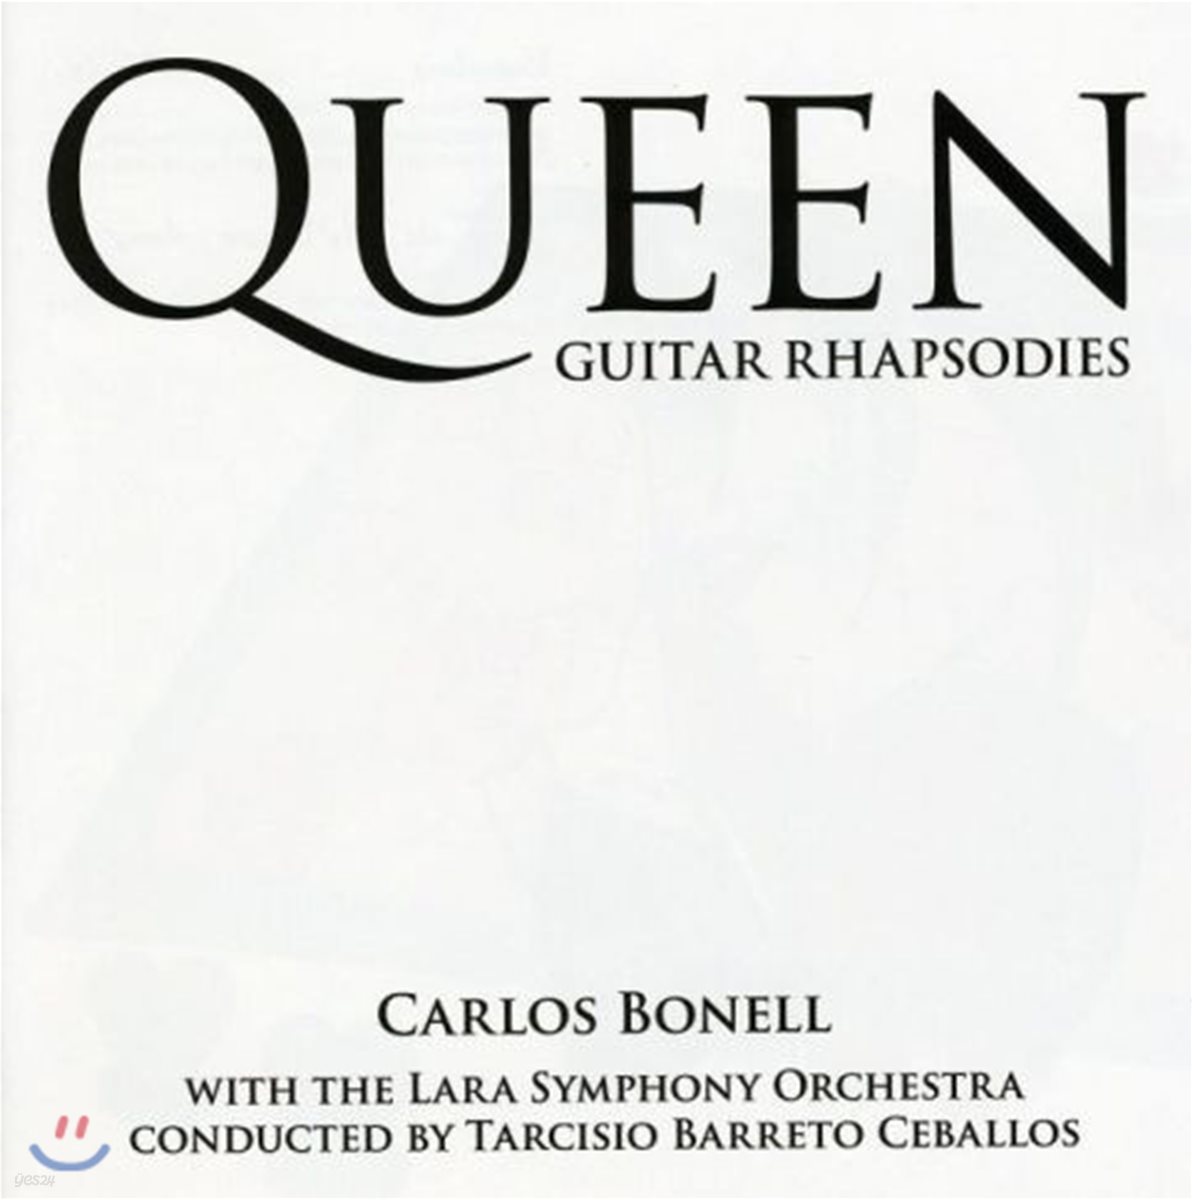 Carlos Bonell 클래식 기타와 관현악으로 연주한 퀸의 음악 (Queen : Guitar Rhapsodies)